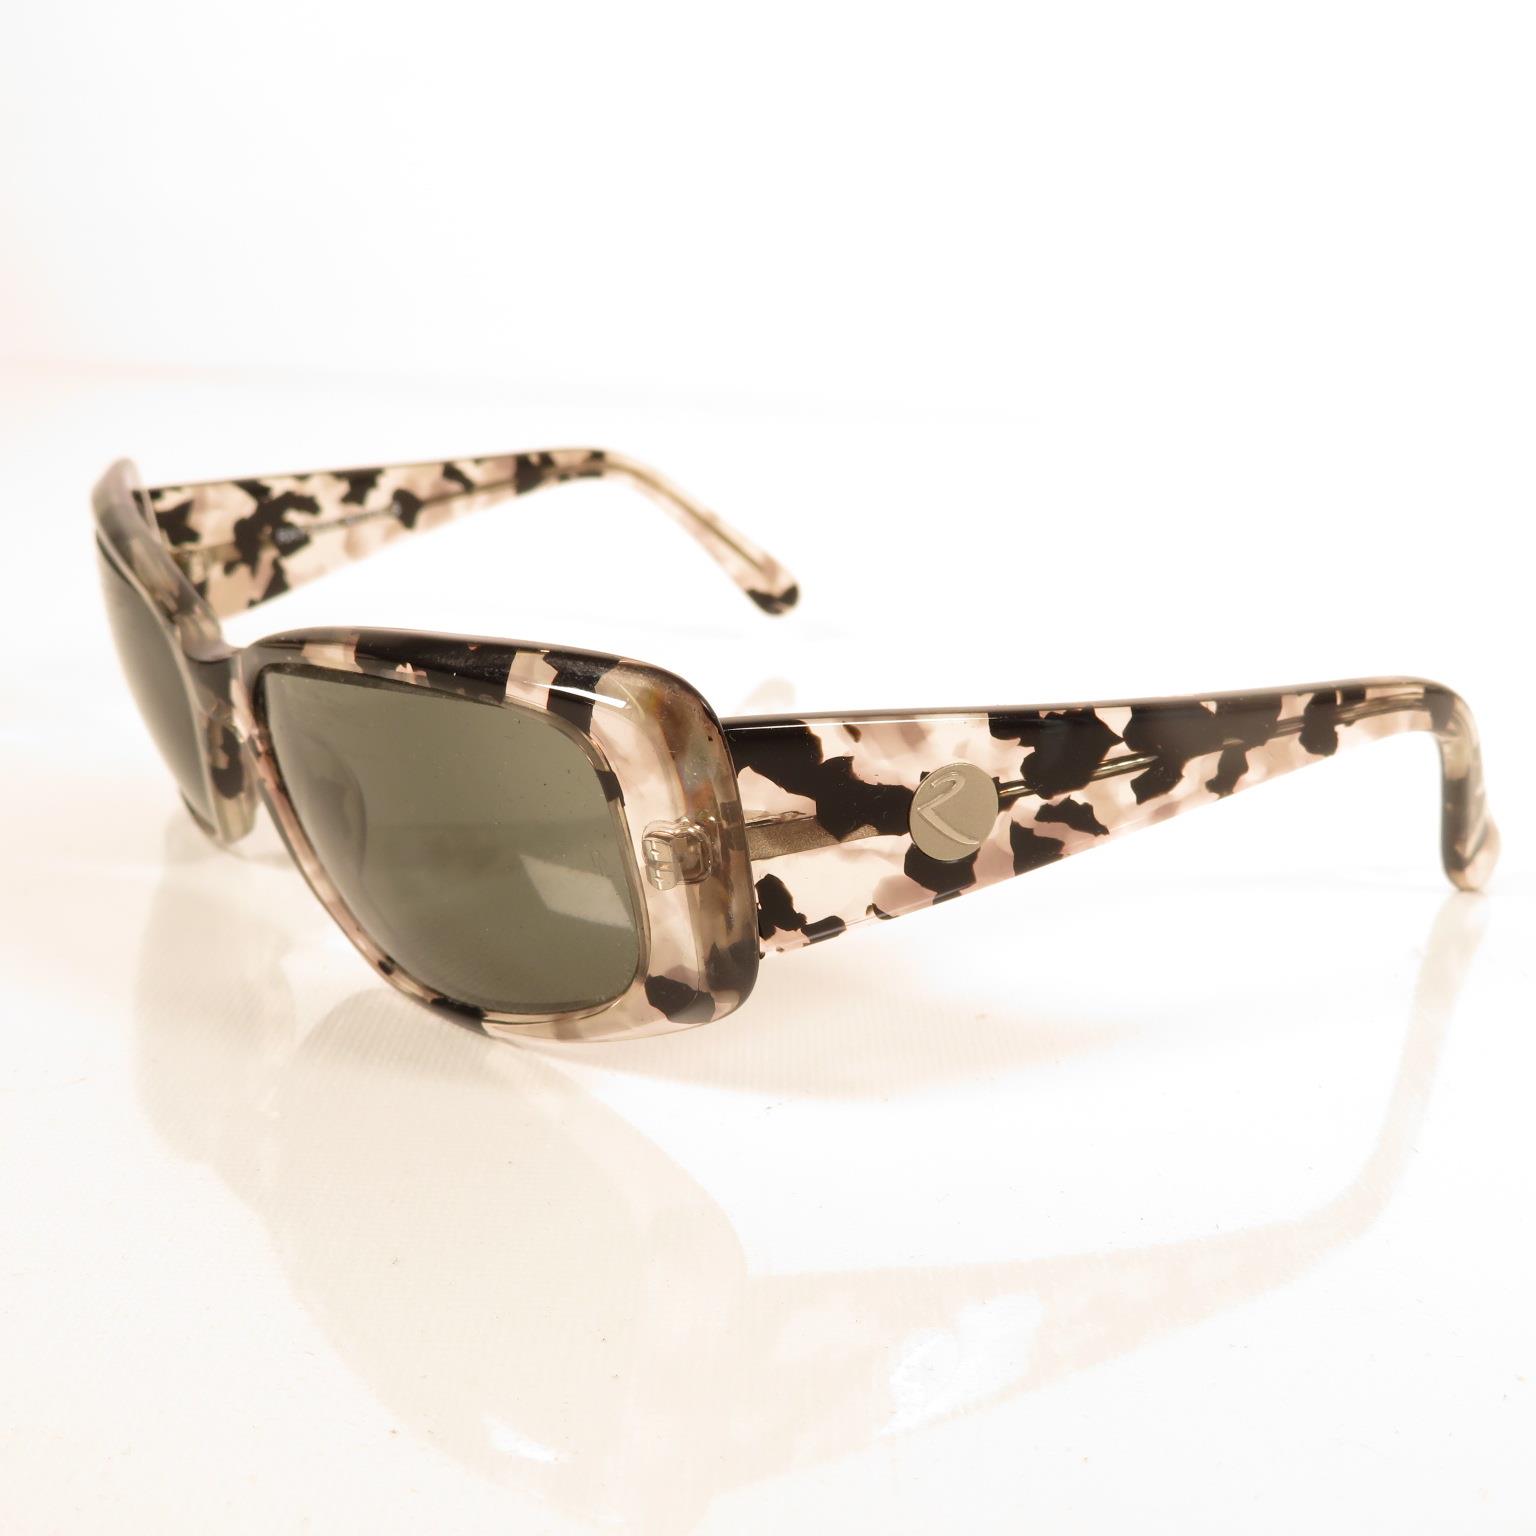 5x sets of Ray Ban sunglasses - - Image 21 of 23